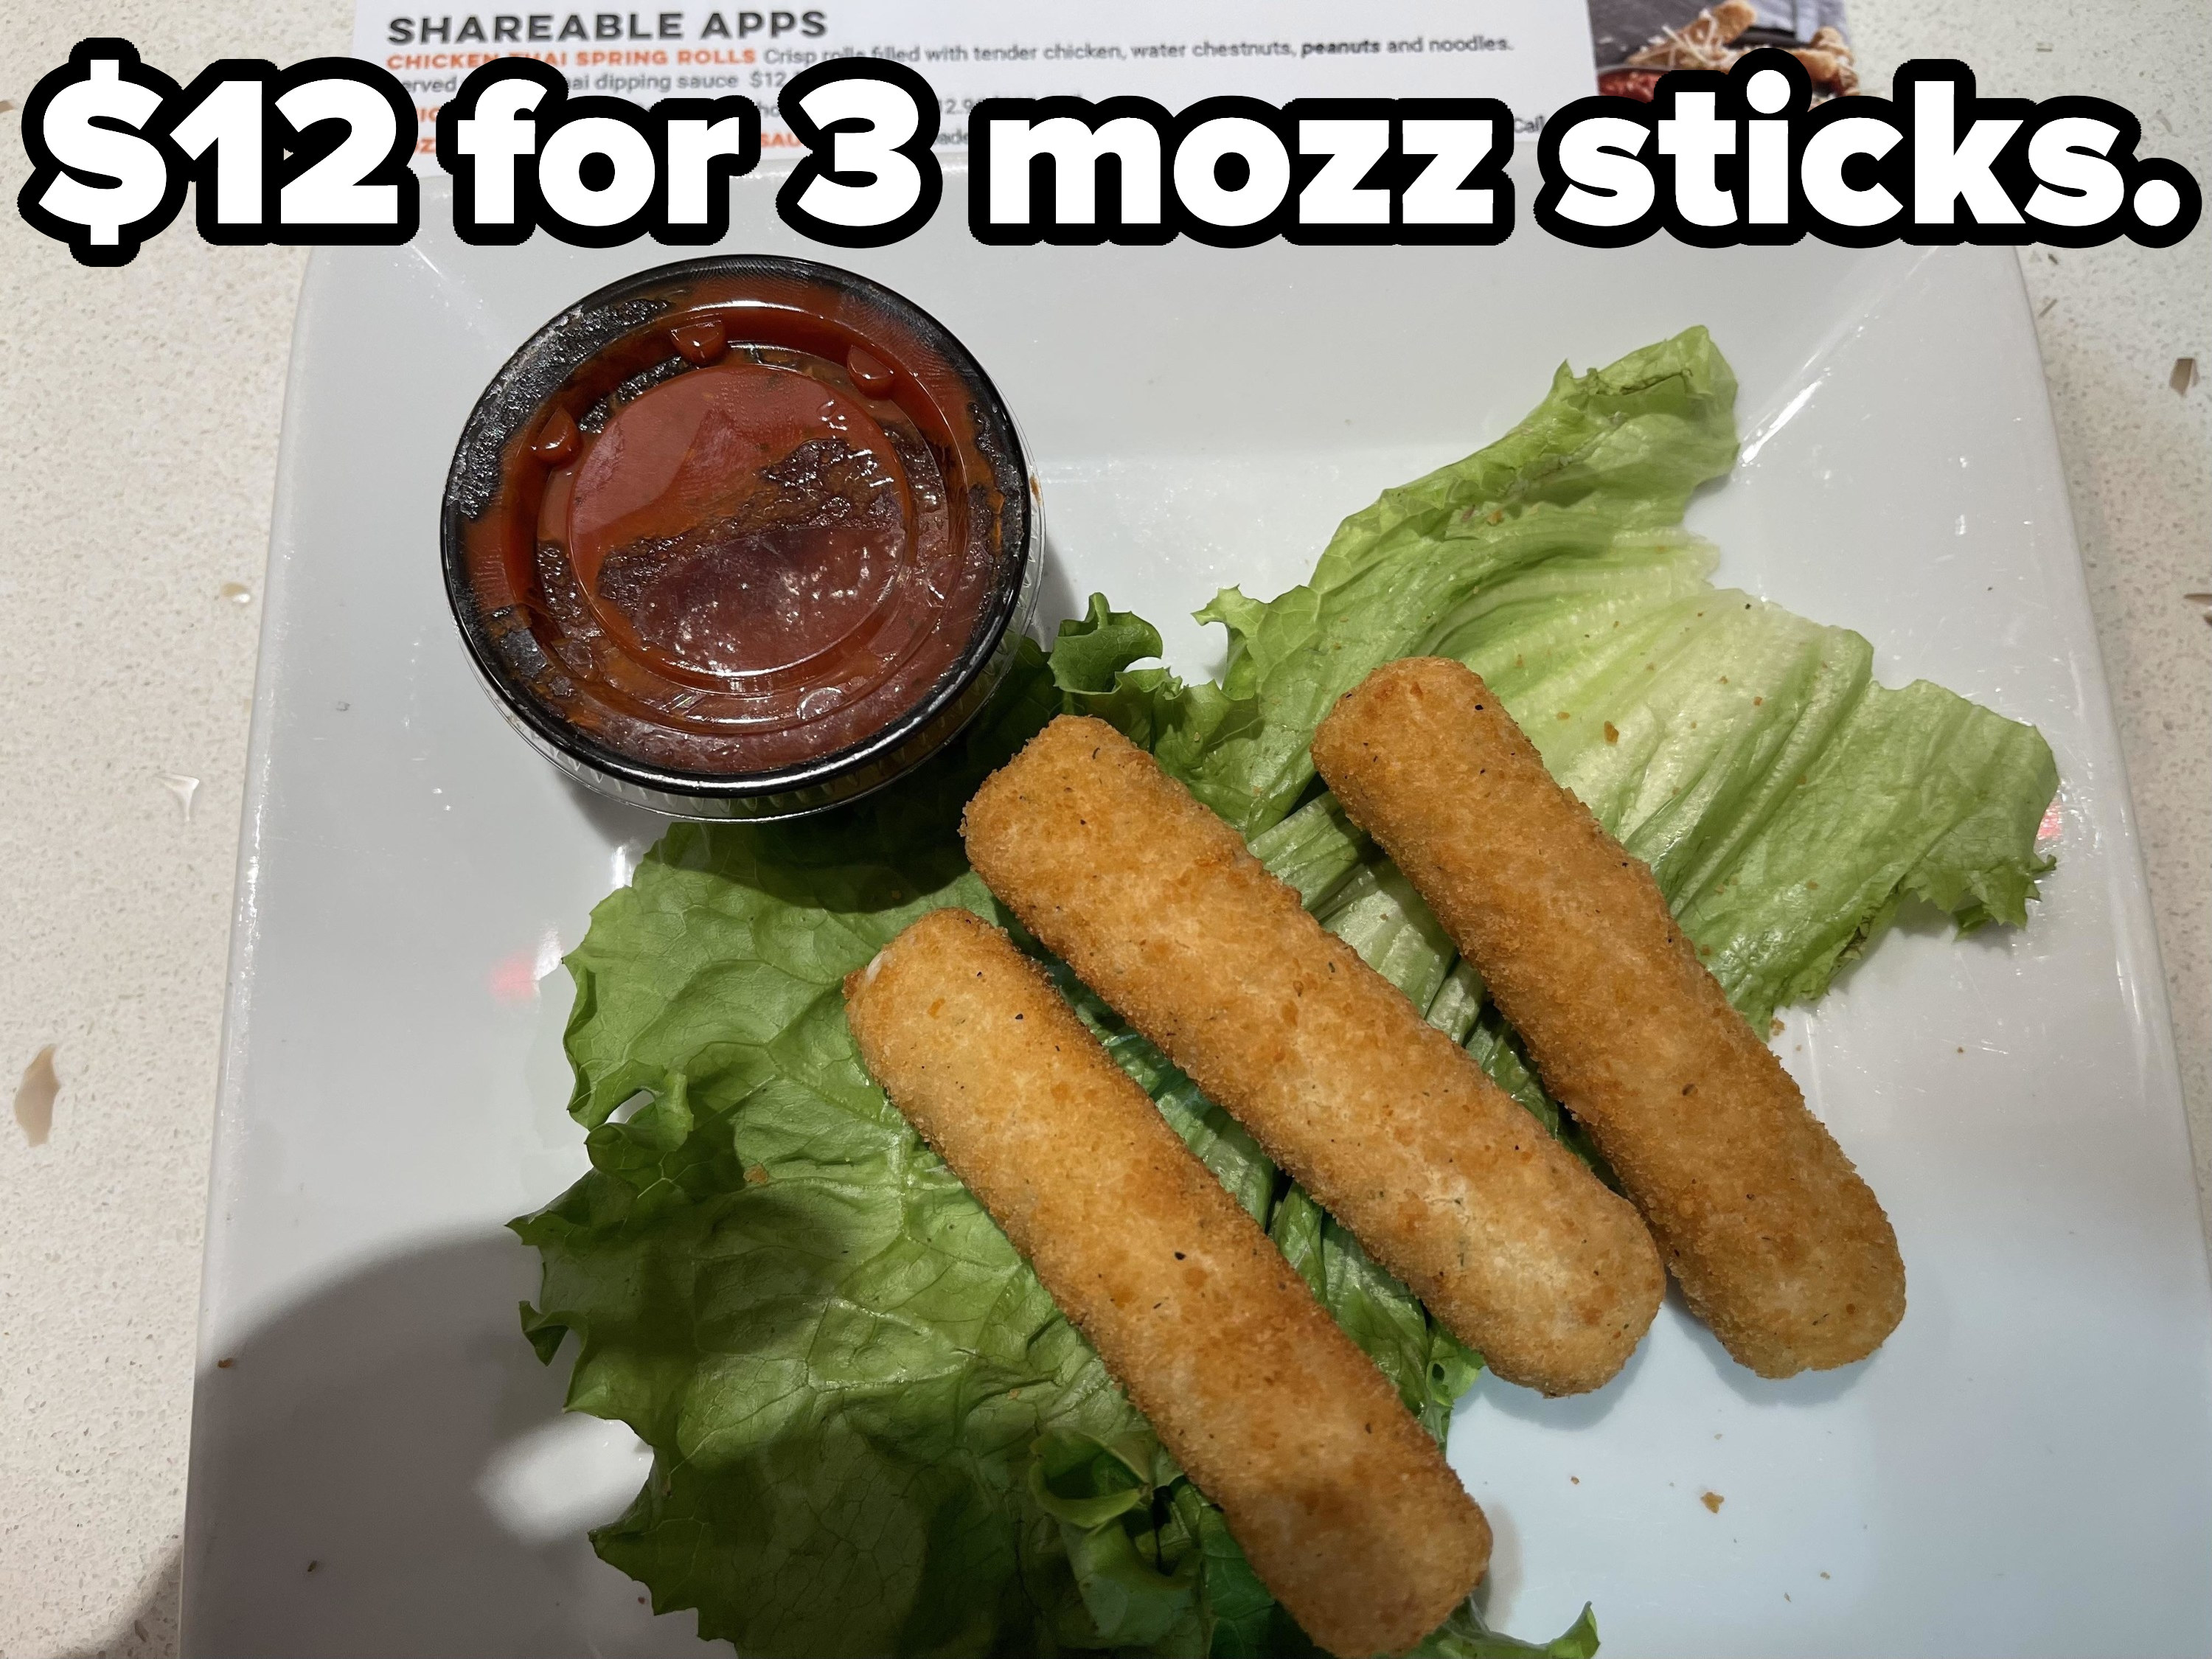 3 mozz sticks